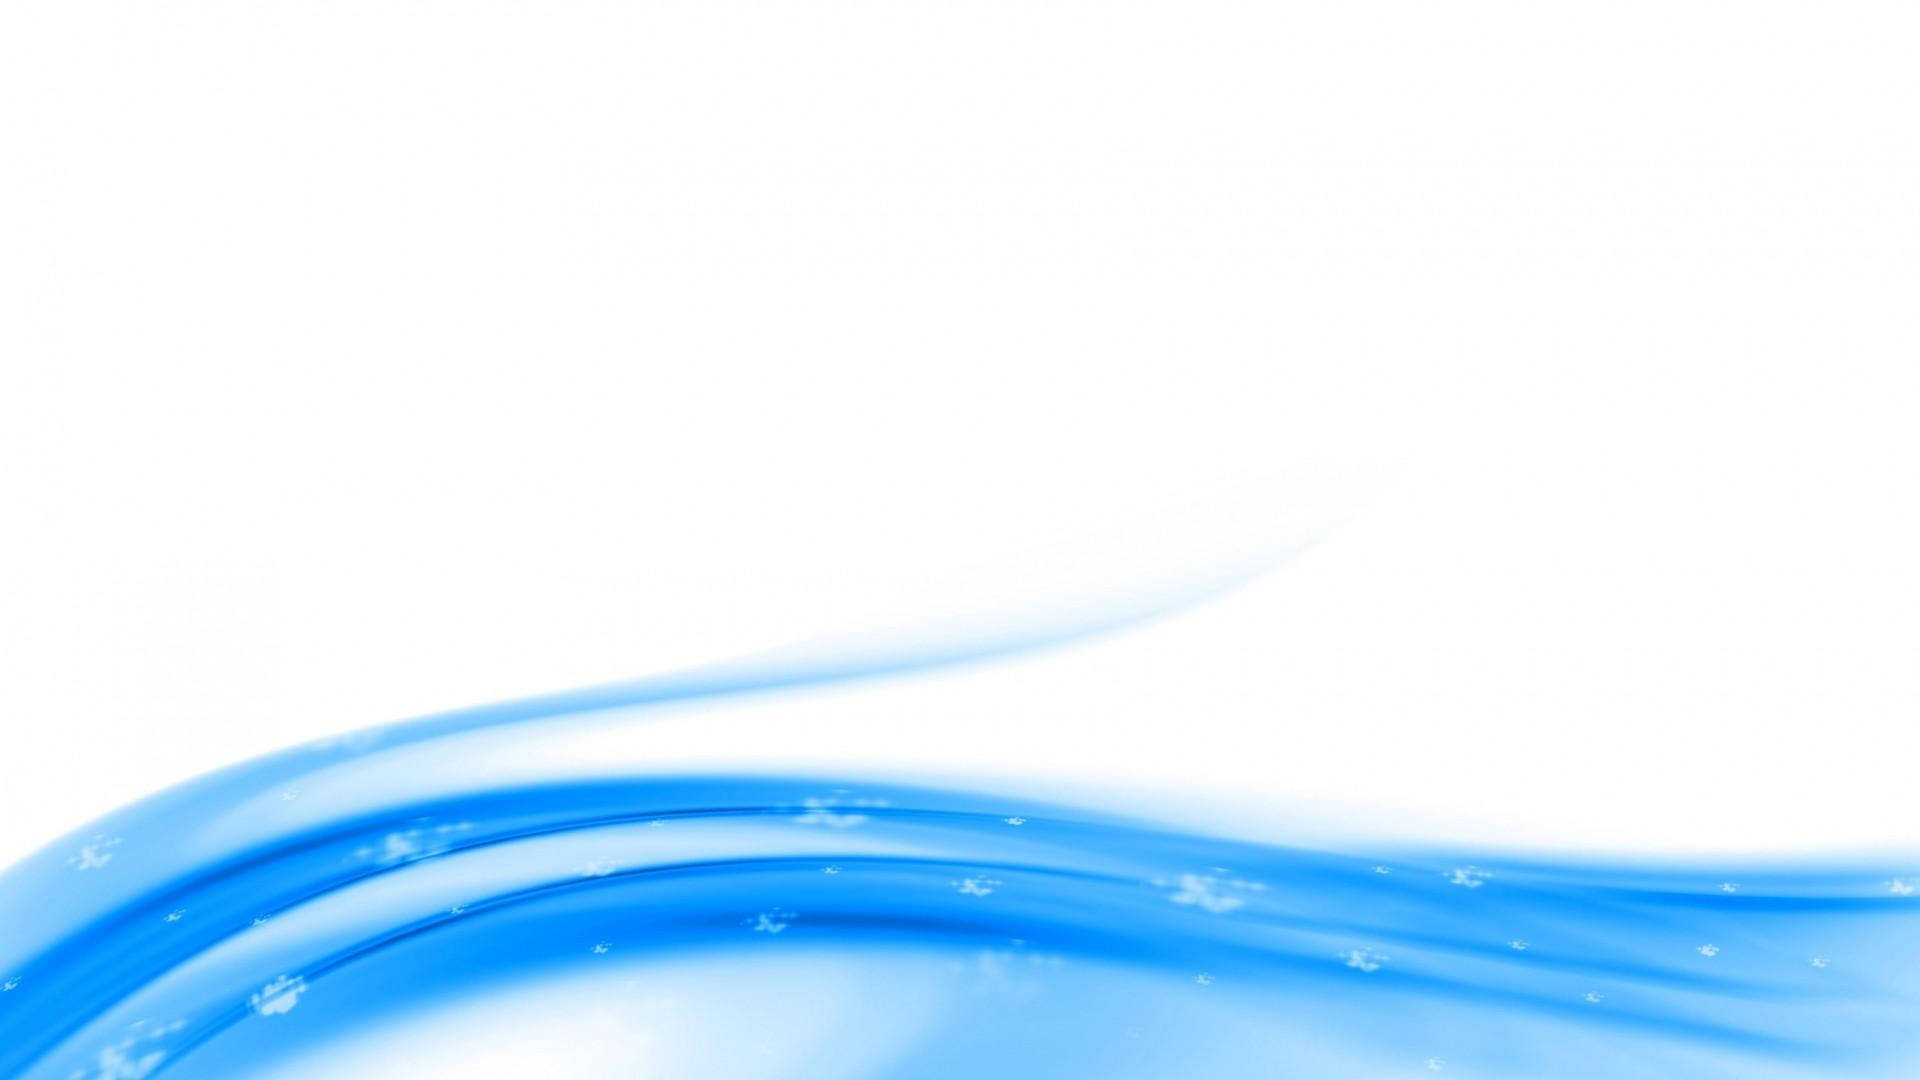 Colorblanco Con Borde Azul. Fondo de pantalla